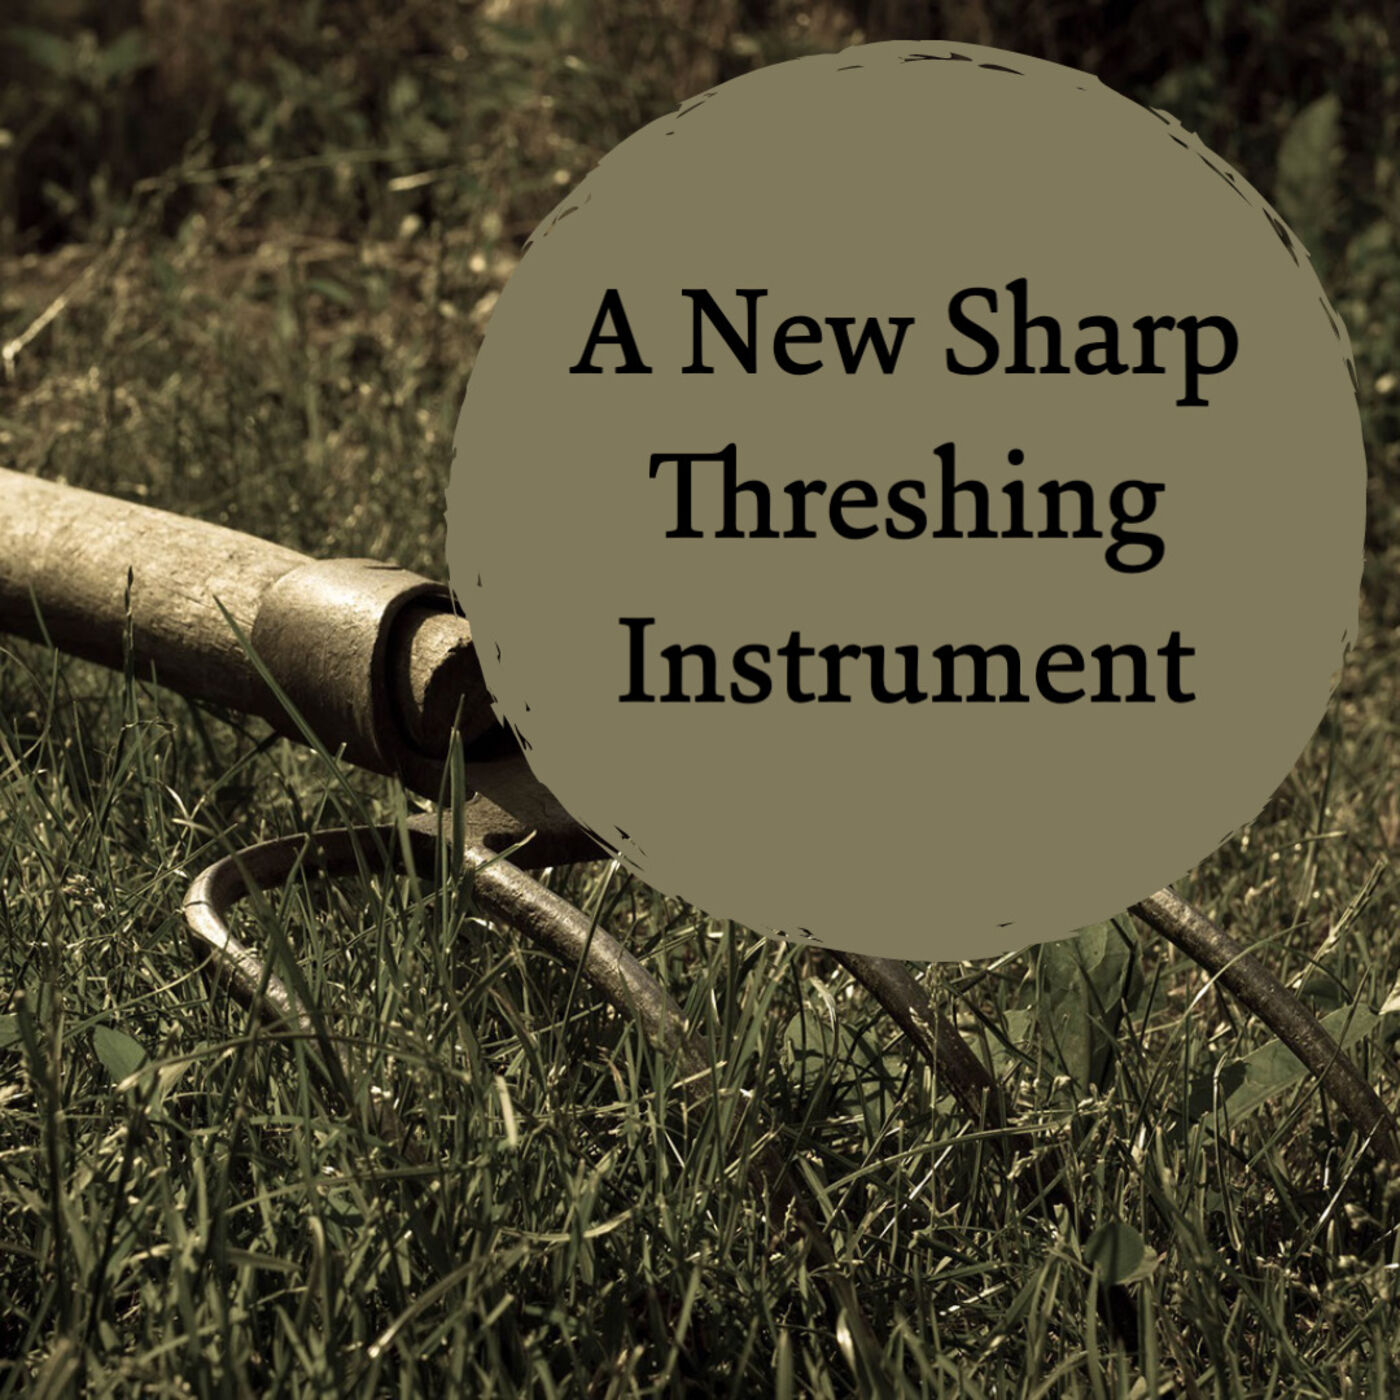 A New Sharp Threshing Instrument